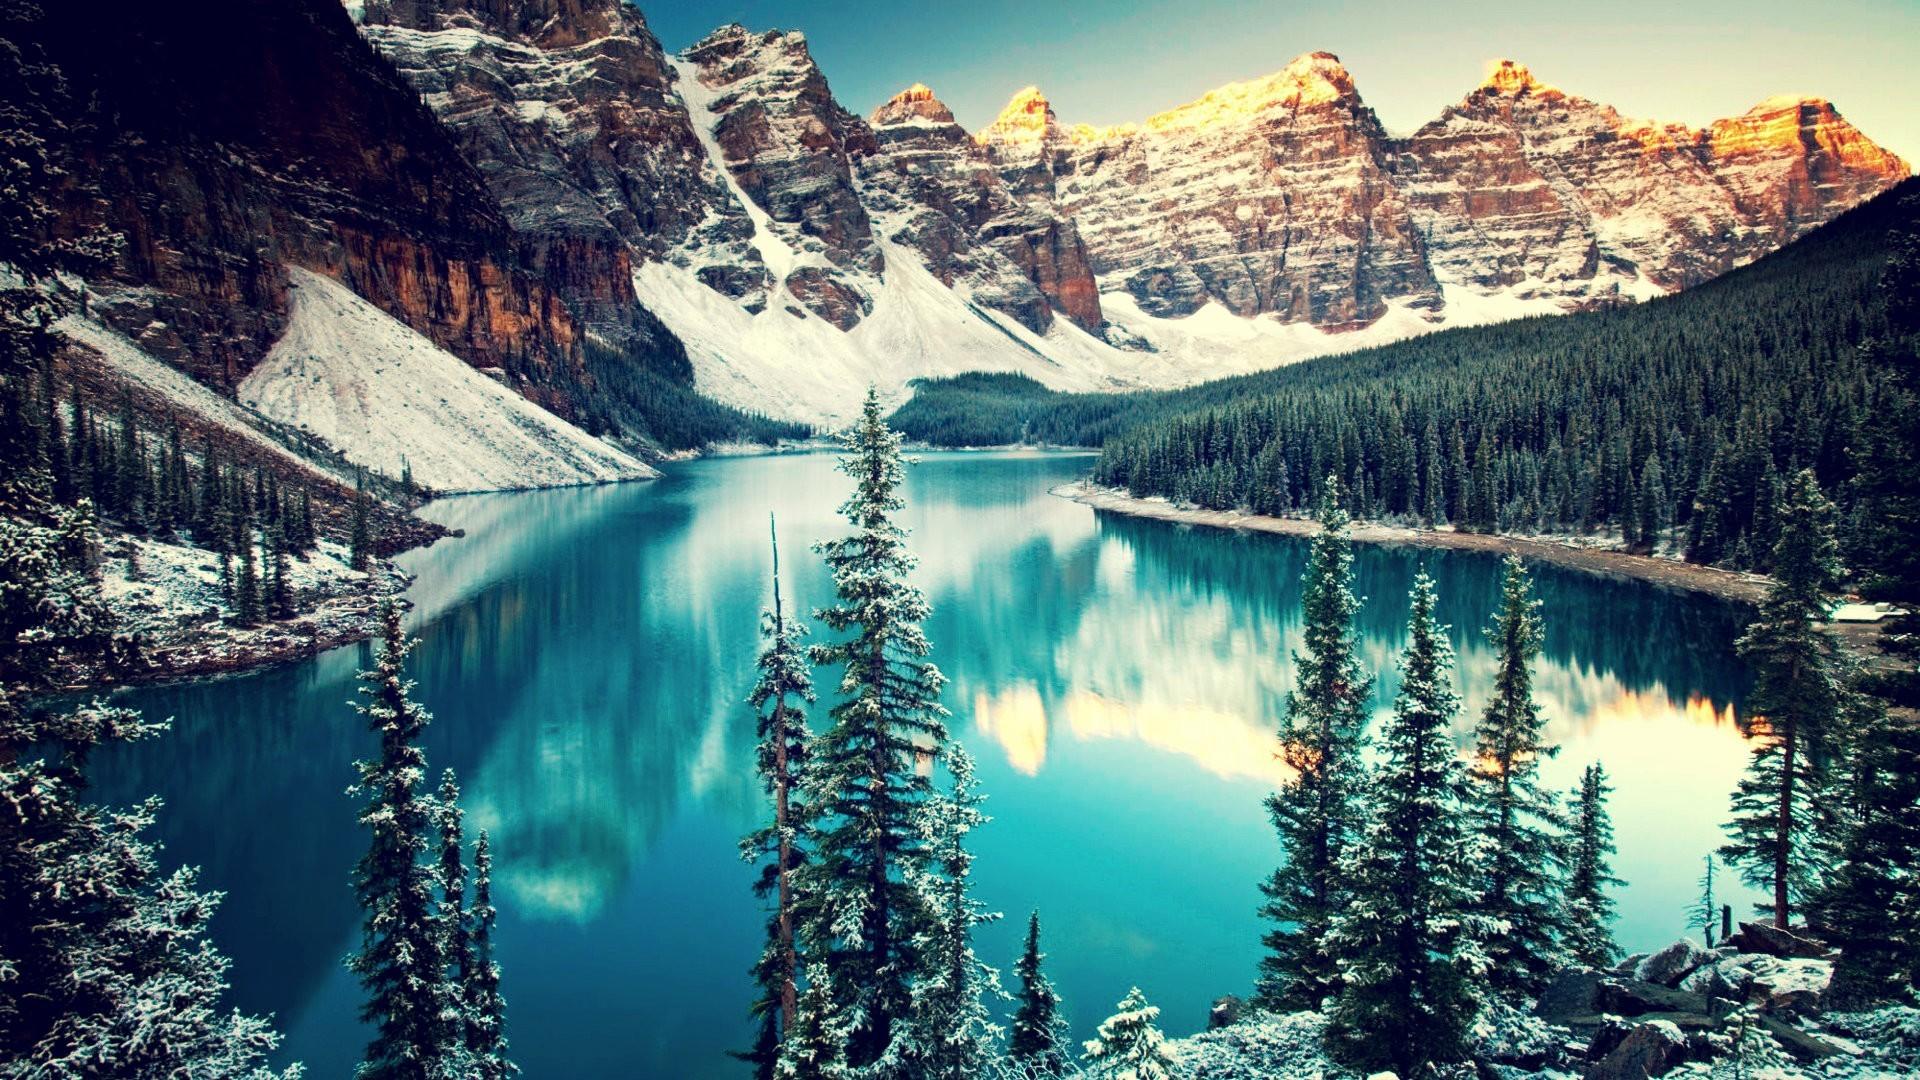 #reflection, #landscape, #trees, #mountains, #Banff National